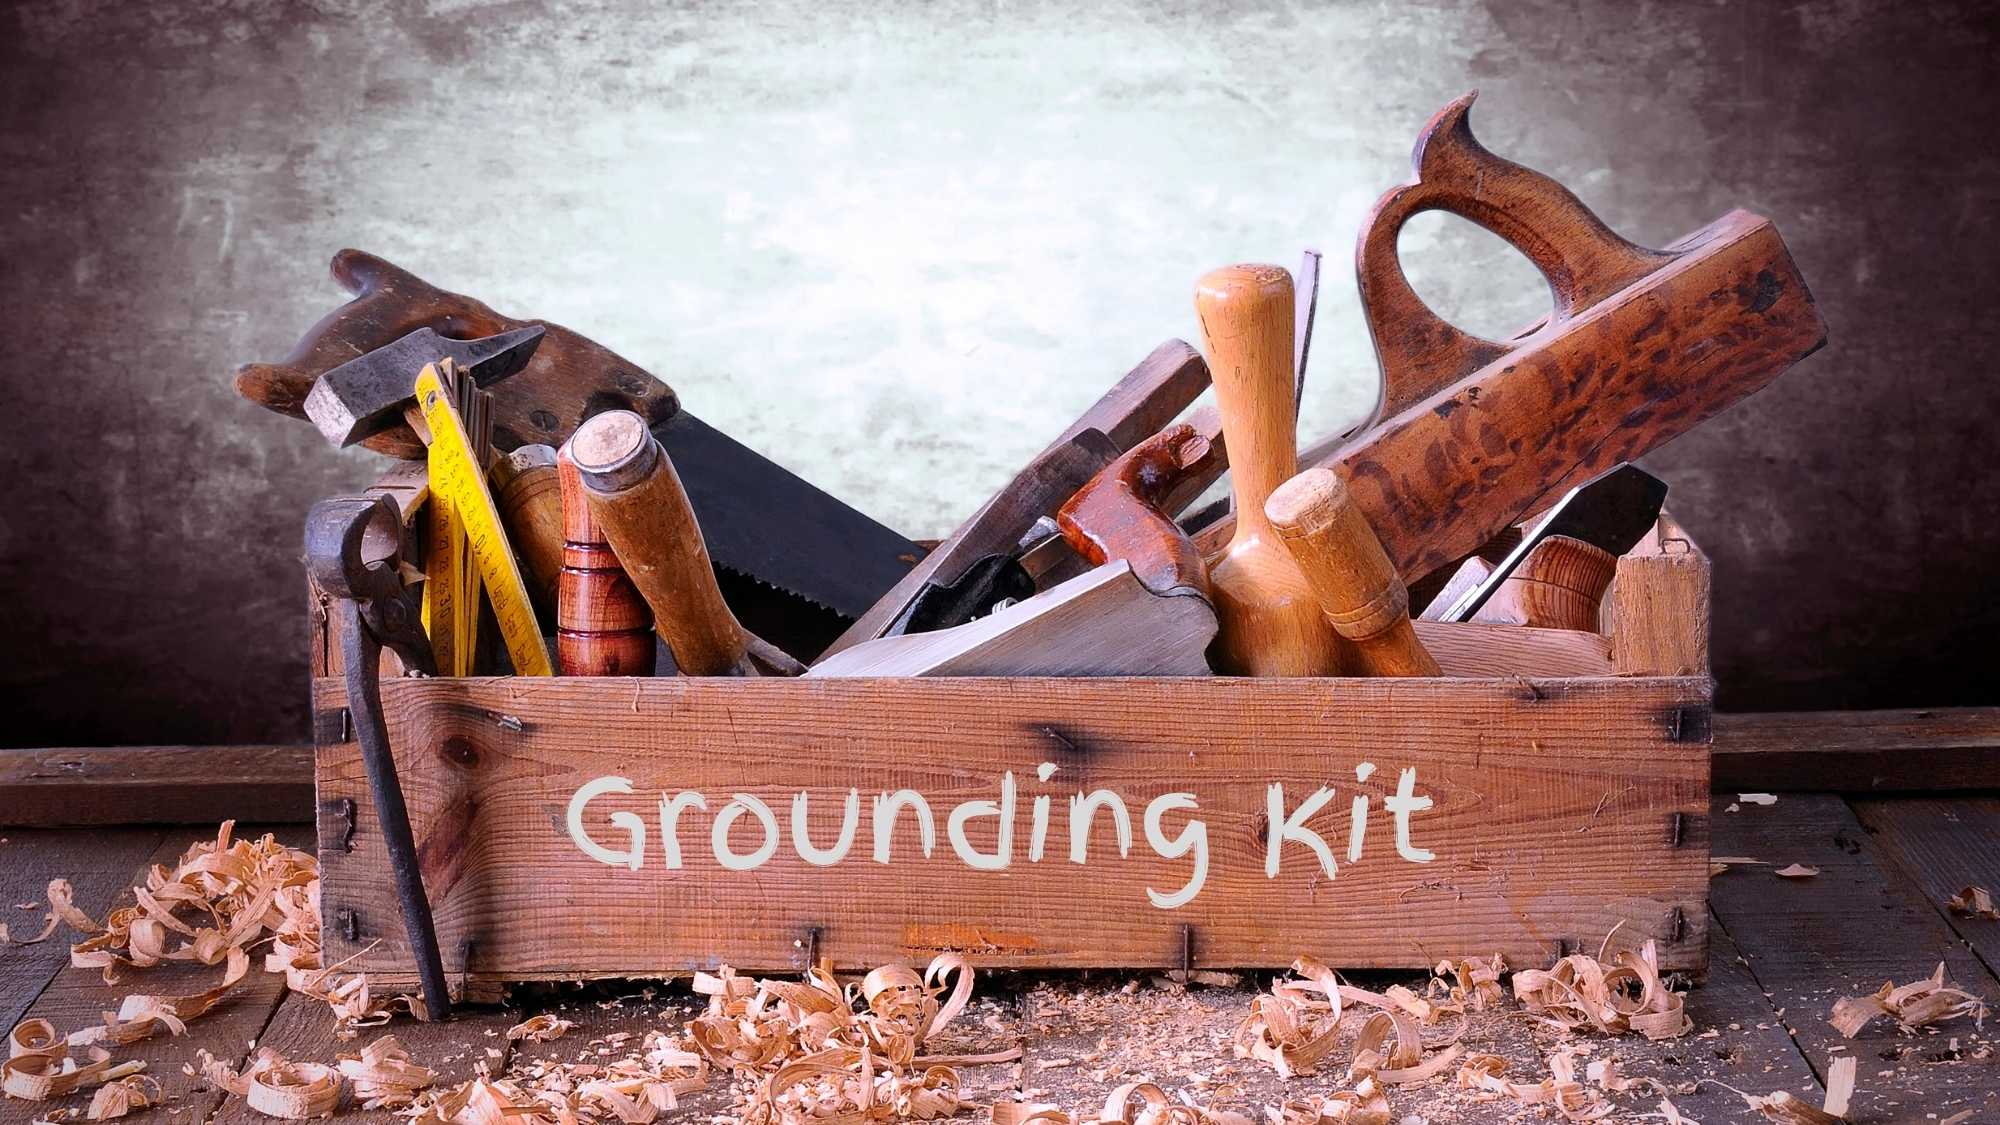 grounding kit